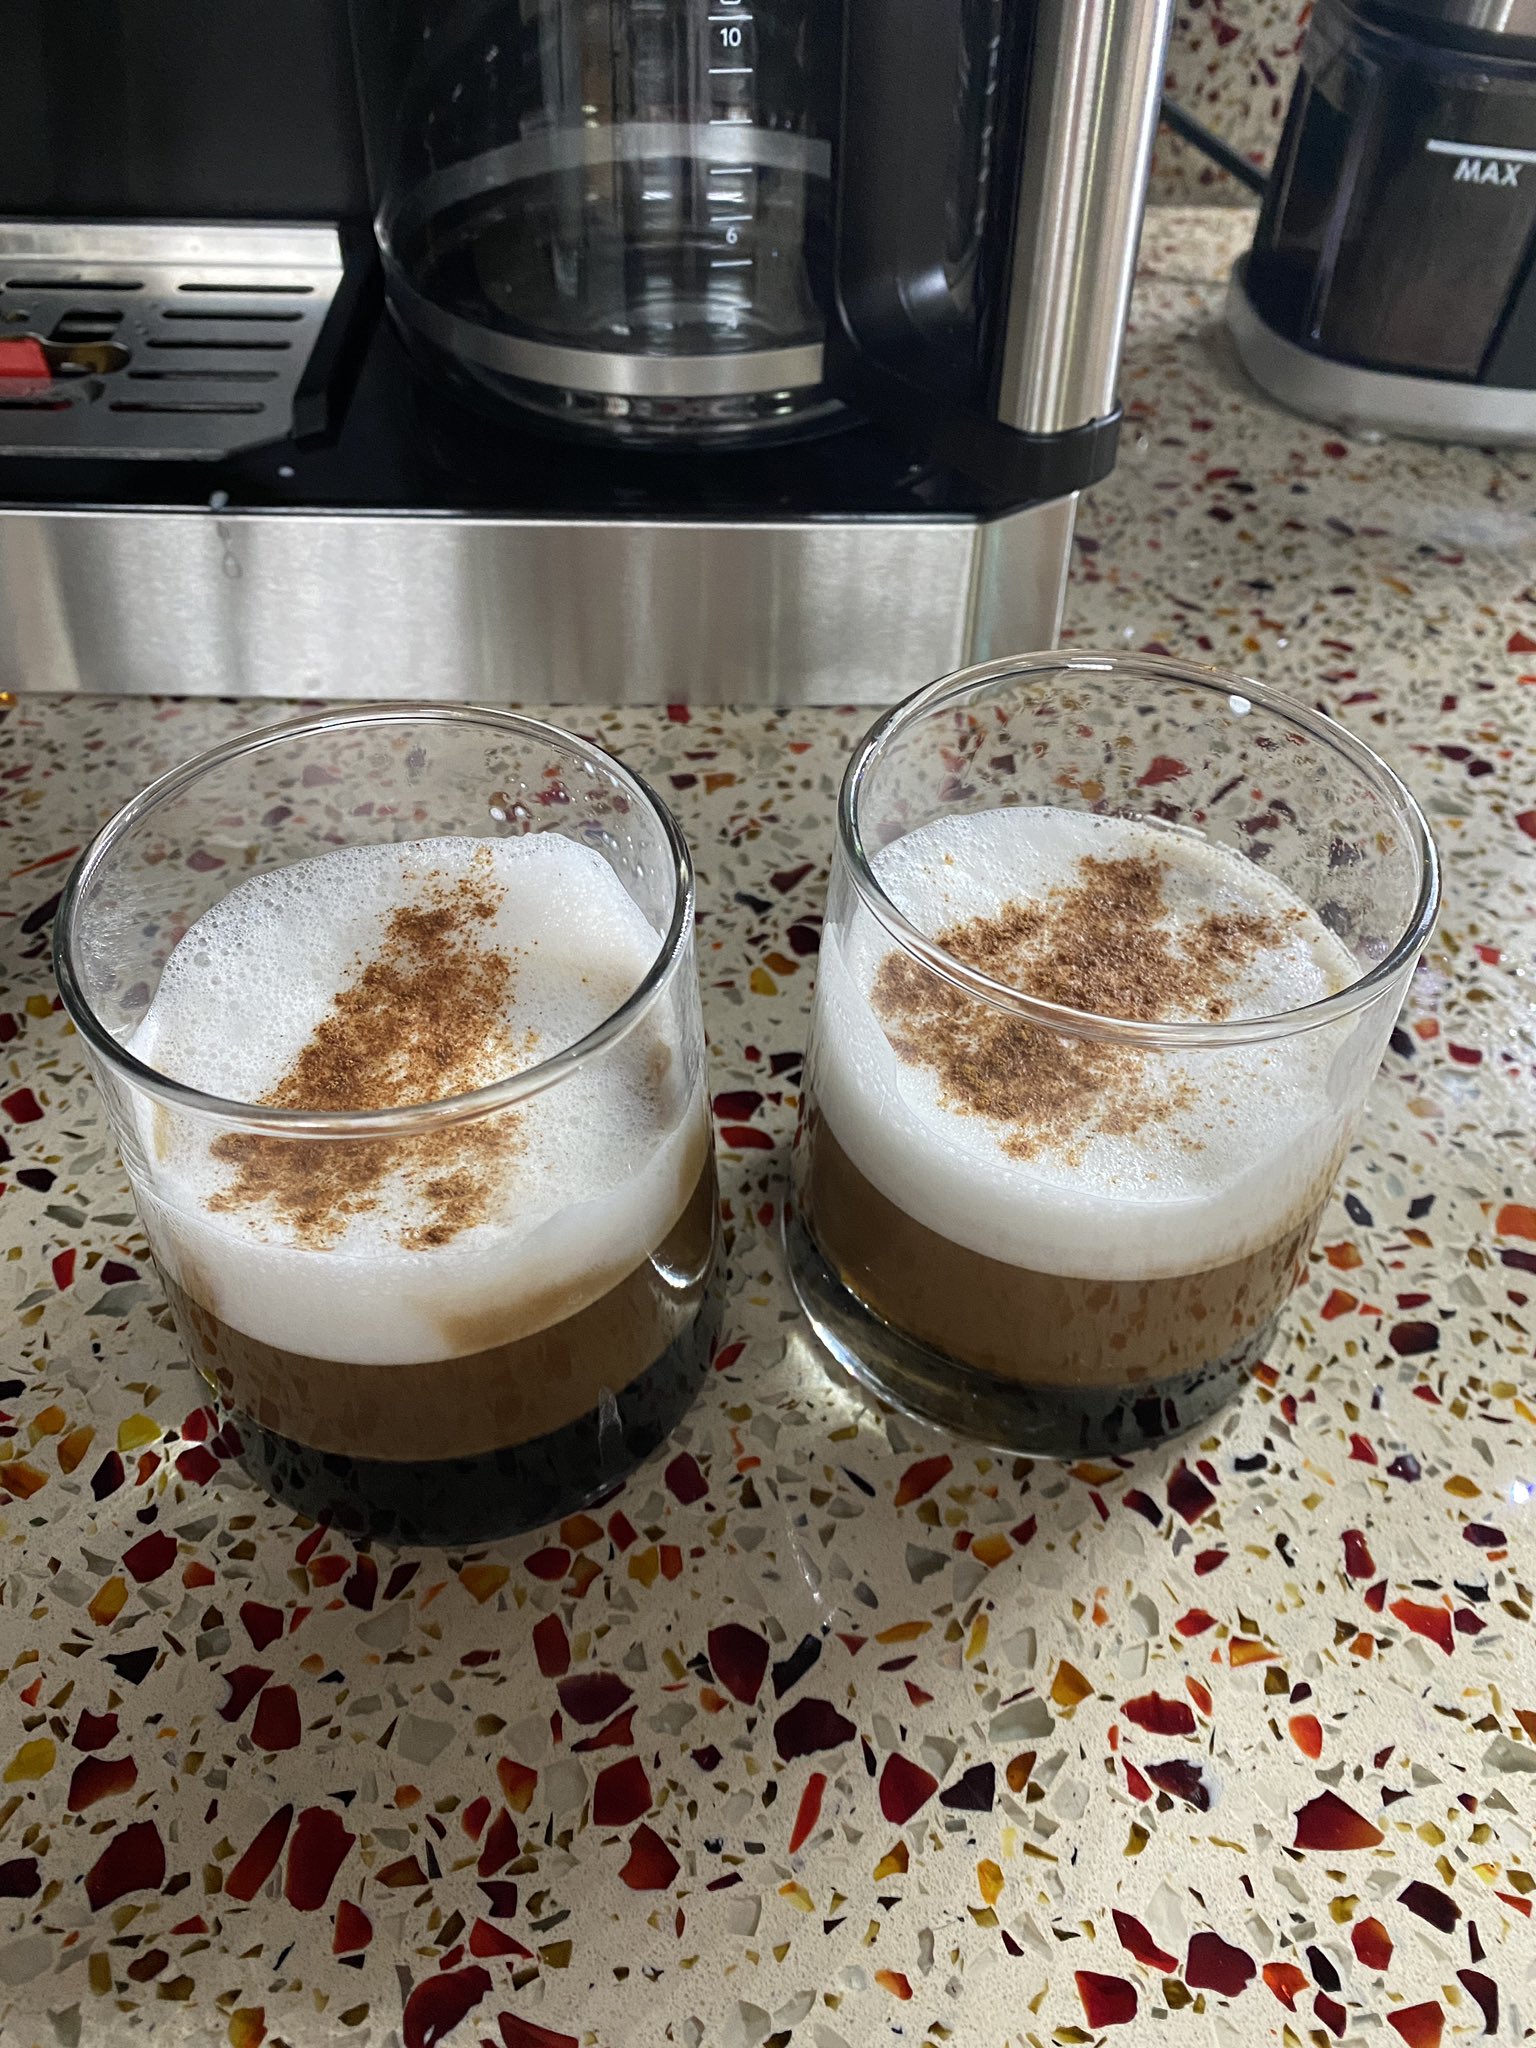 I really make the best espresso ☕️ https://t.co/LbMwUDCUqx